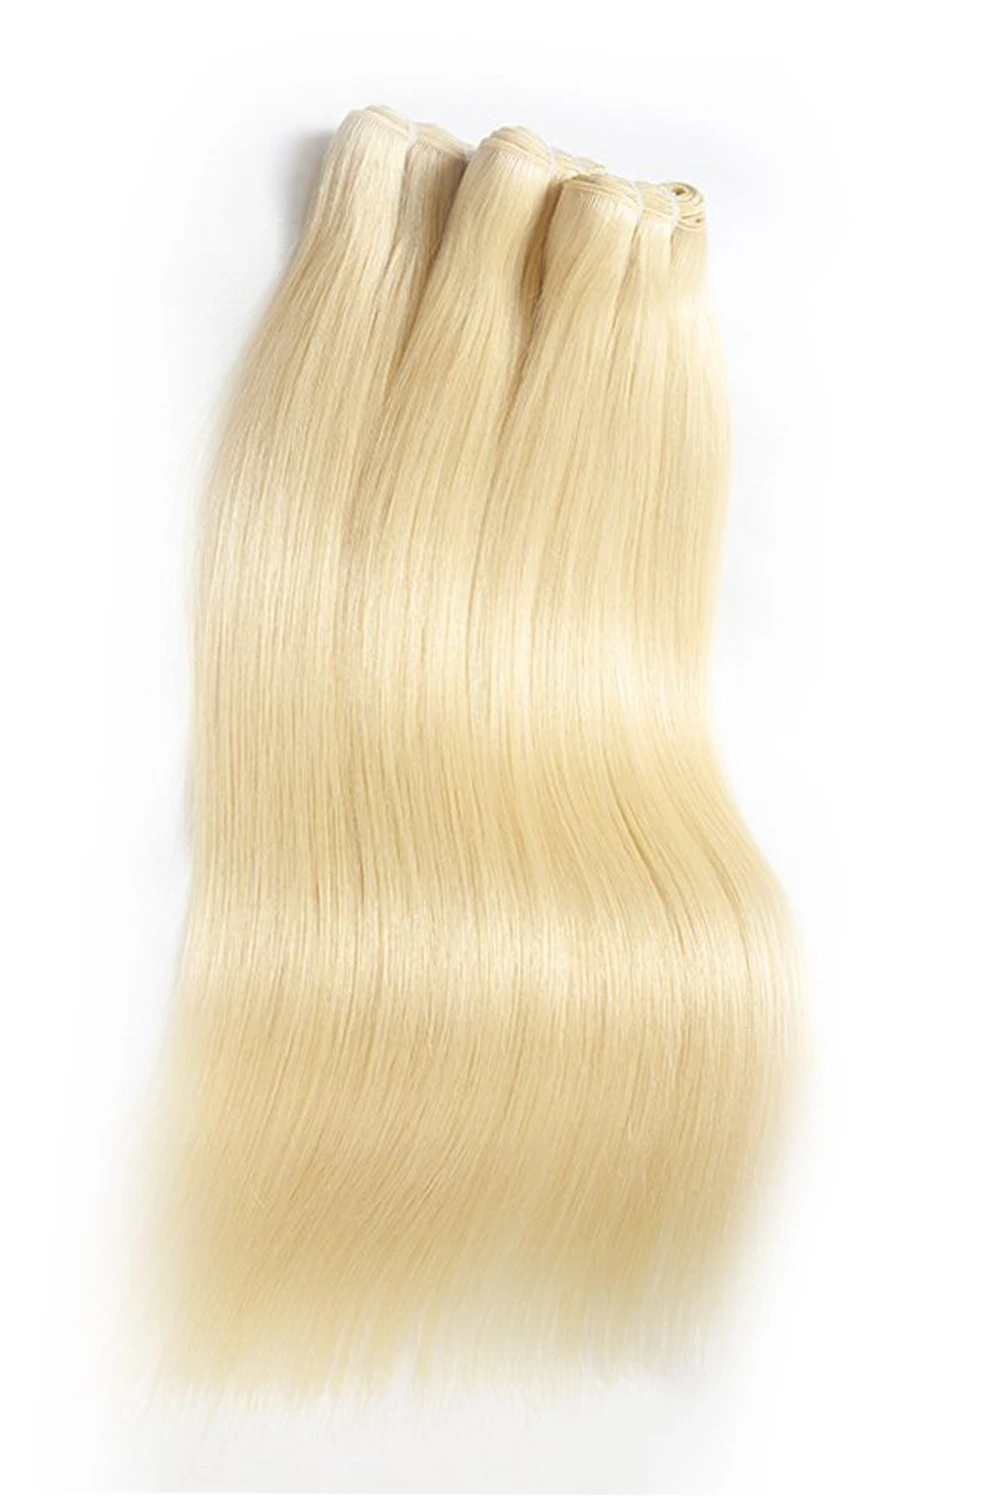 613-blonde-bundles-double-weft-sew-in-extensions-straight-virgin-hair-2